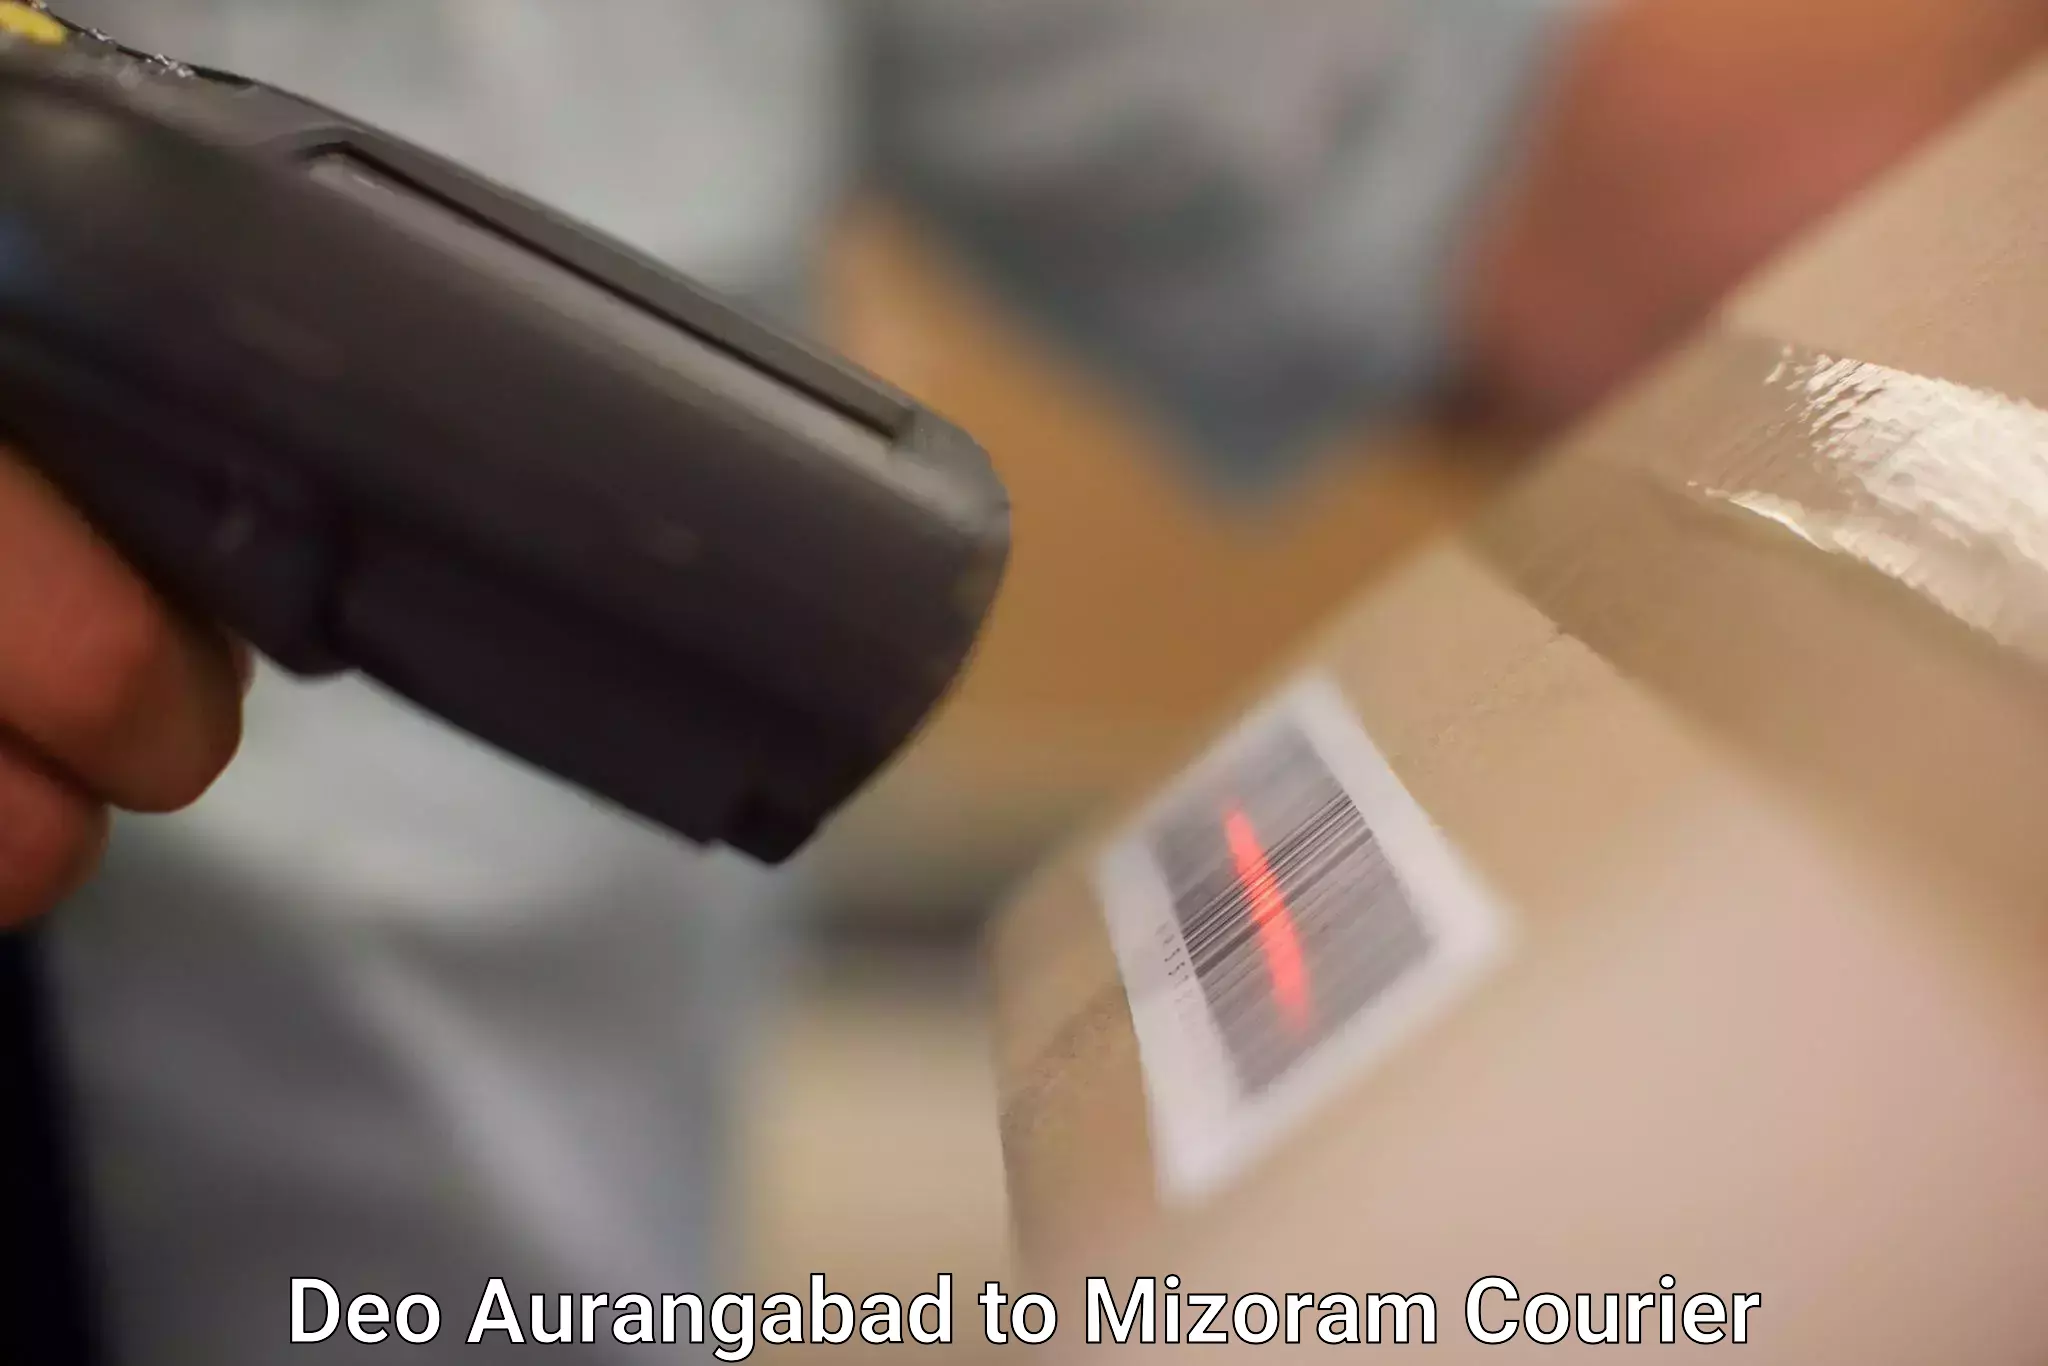 On-call courier service Deo Aurangabad to Mizoram